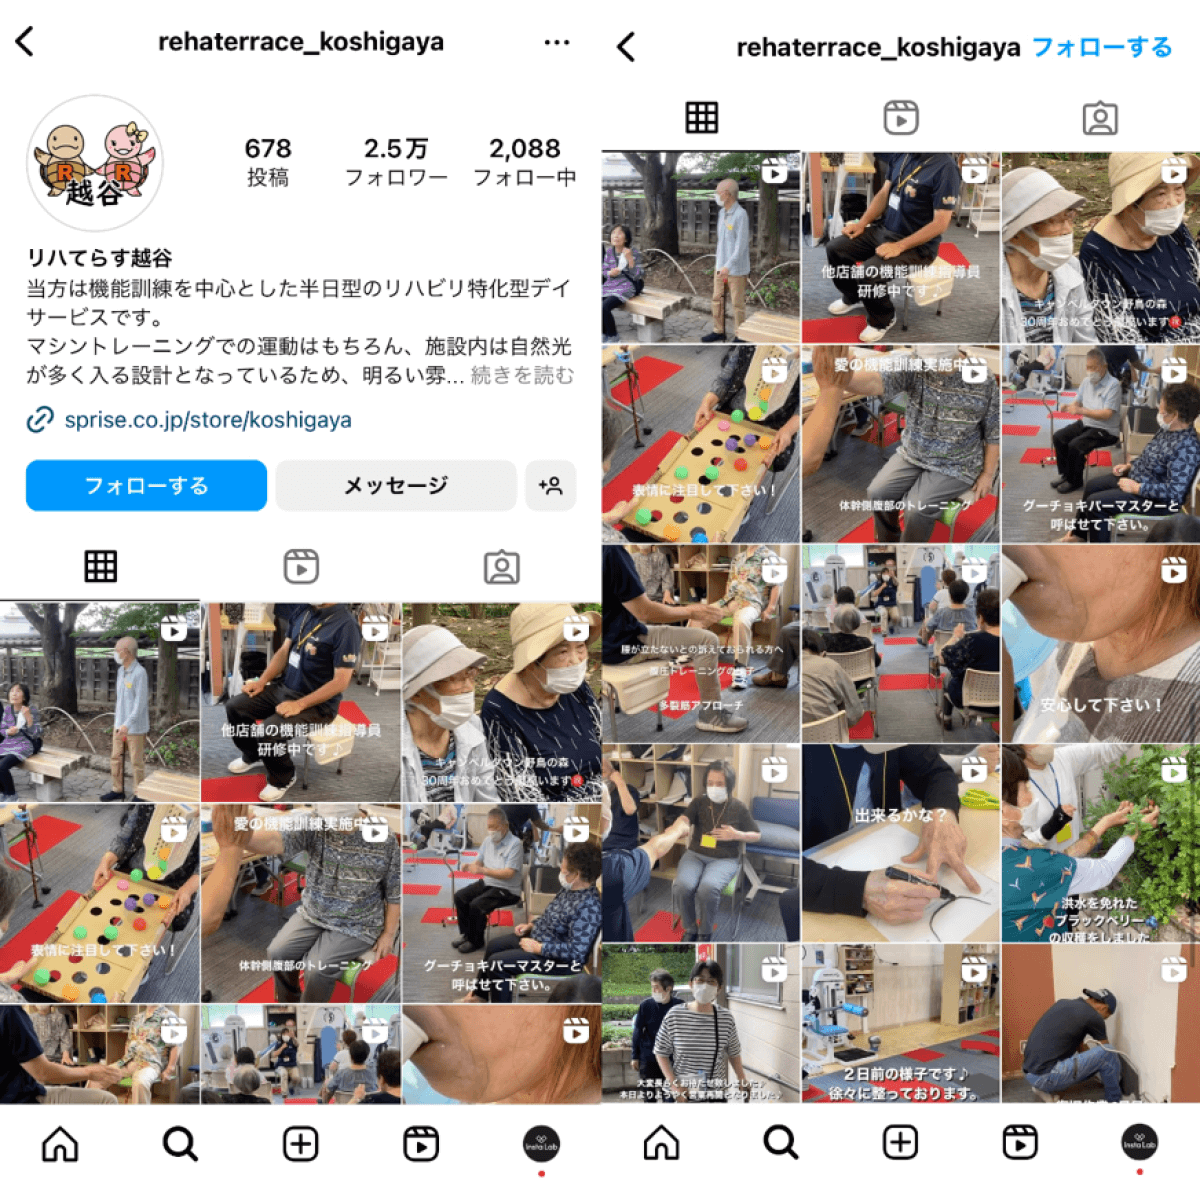 instagram-account-rehaterrace-koshigaya